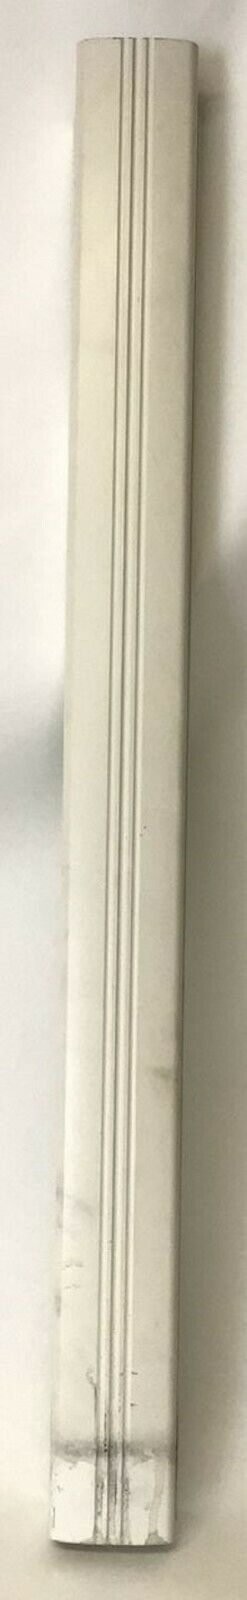 Precor 9.2x 9.21i M9.21i 9.25 9.21si Treadmill White Upright Aluminum Cover - hydrafitnessparts